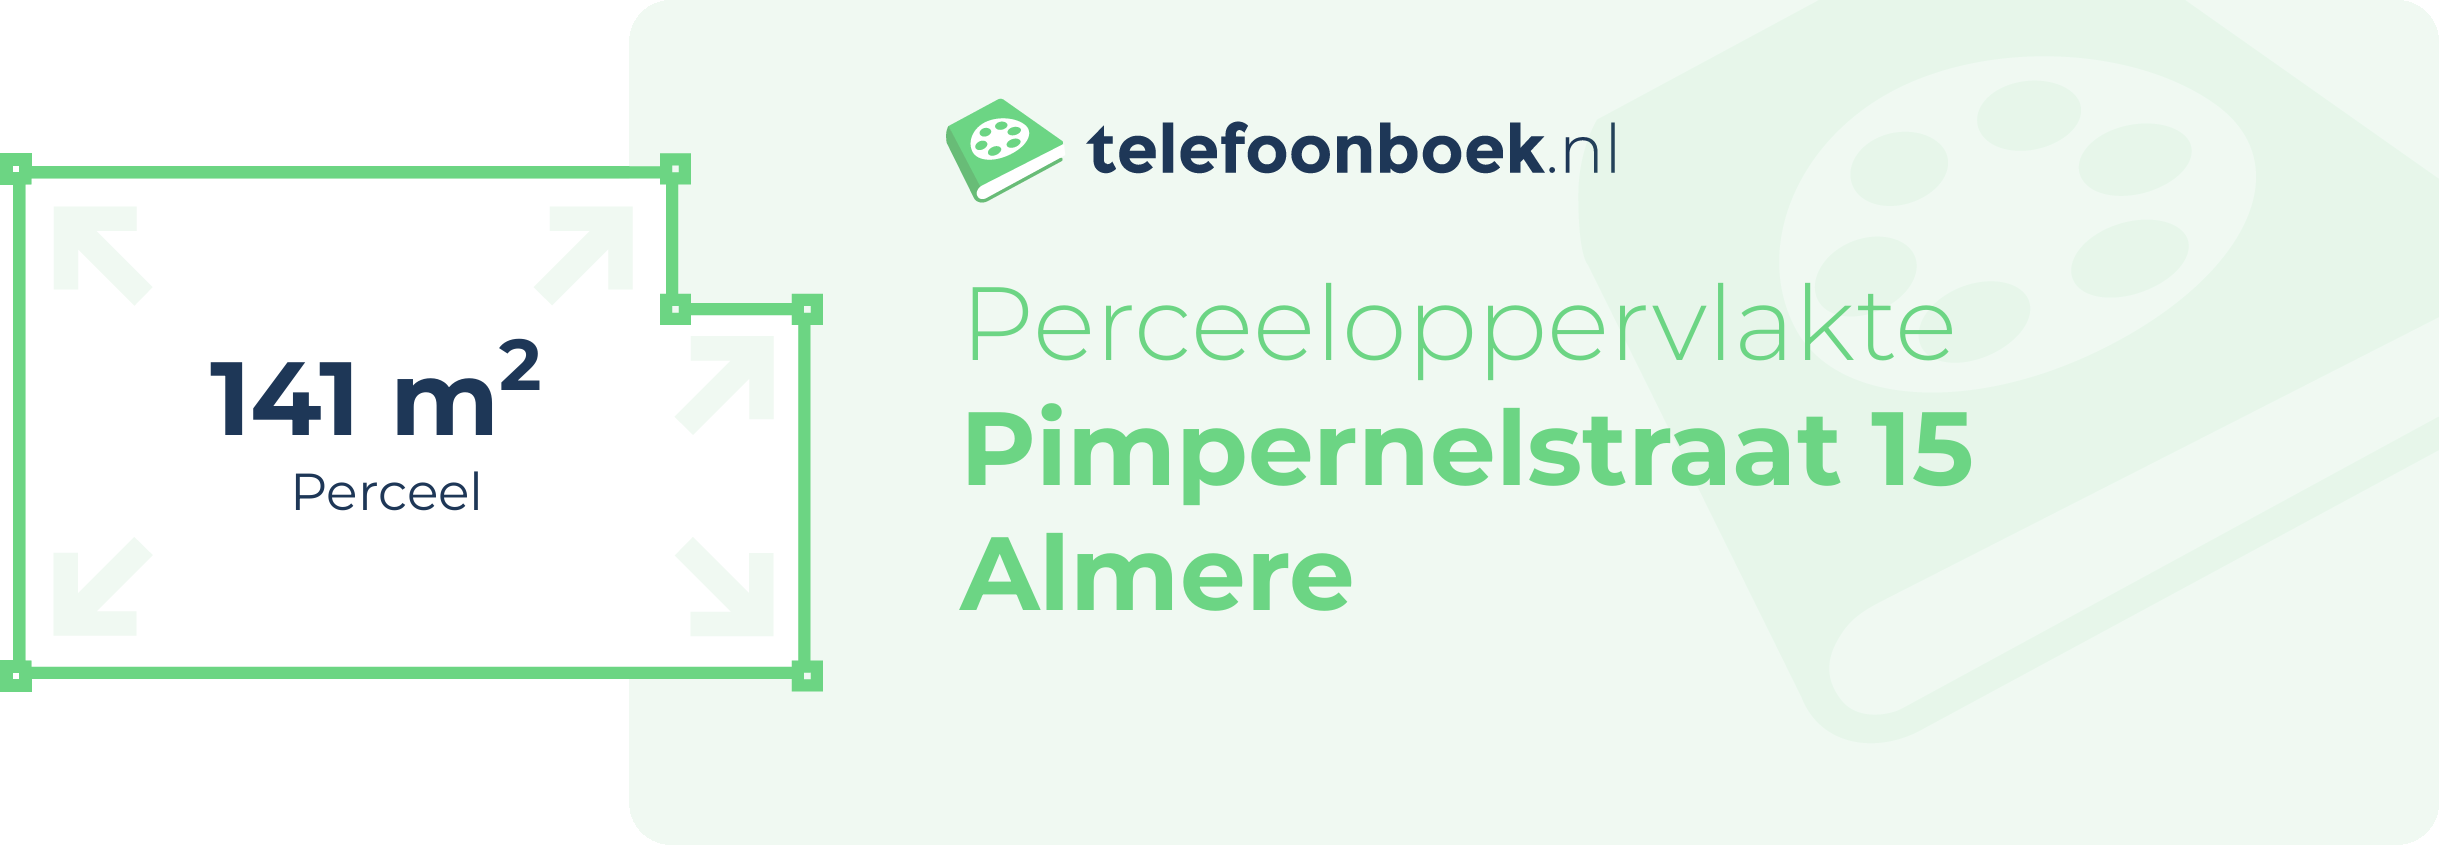 Perceeloppervlakte Pimpernelstraat 15 Almere